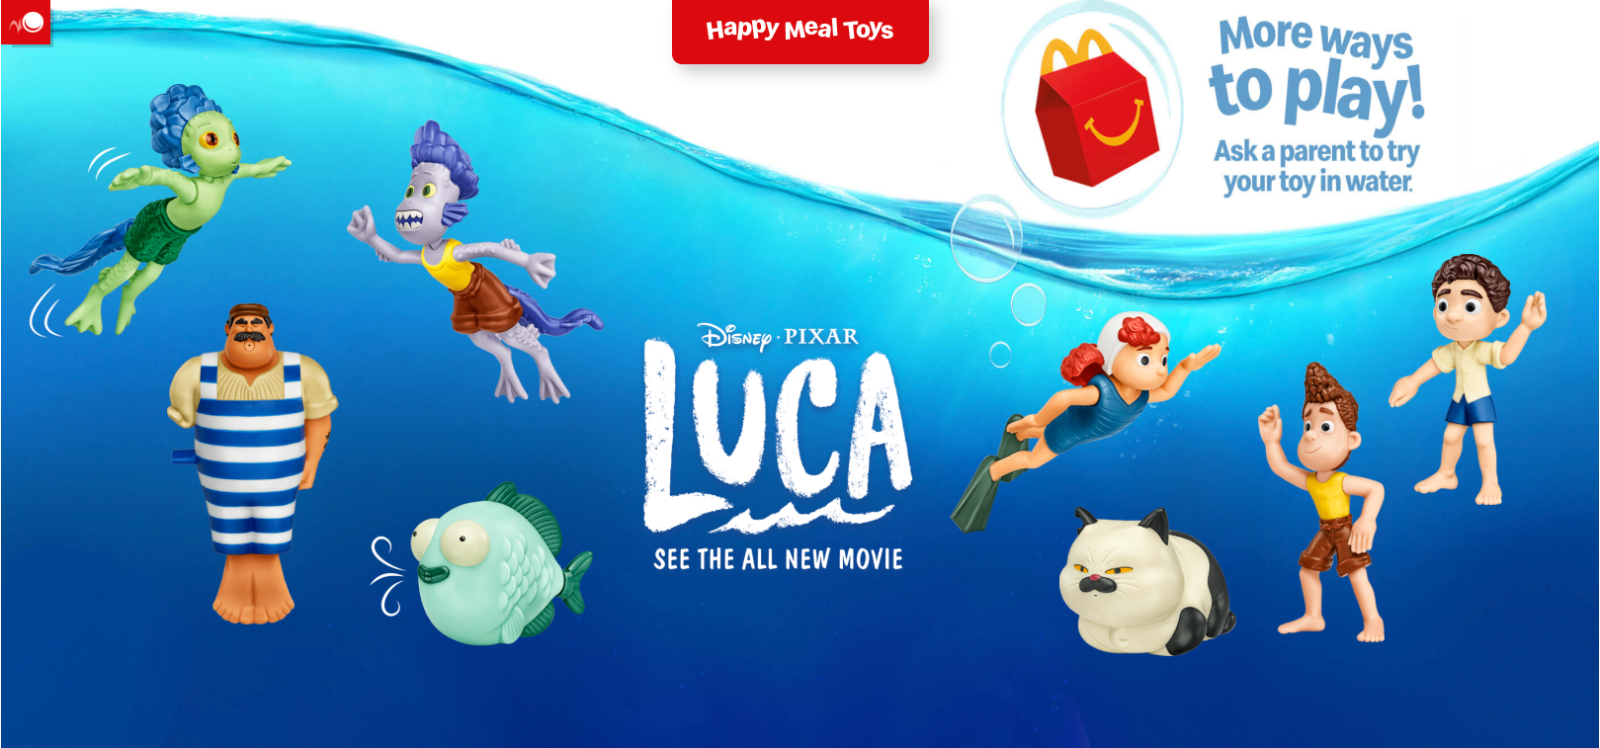 2021 McDONALD'S Disney's Luca Pixar HAPPY MEAL TOYS Or Set